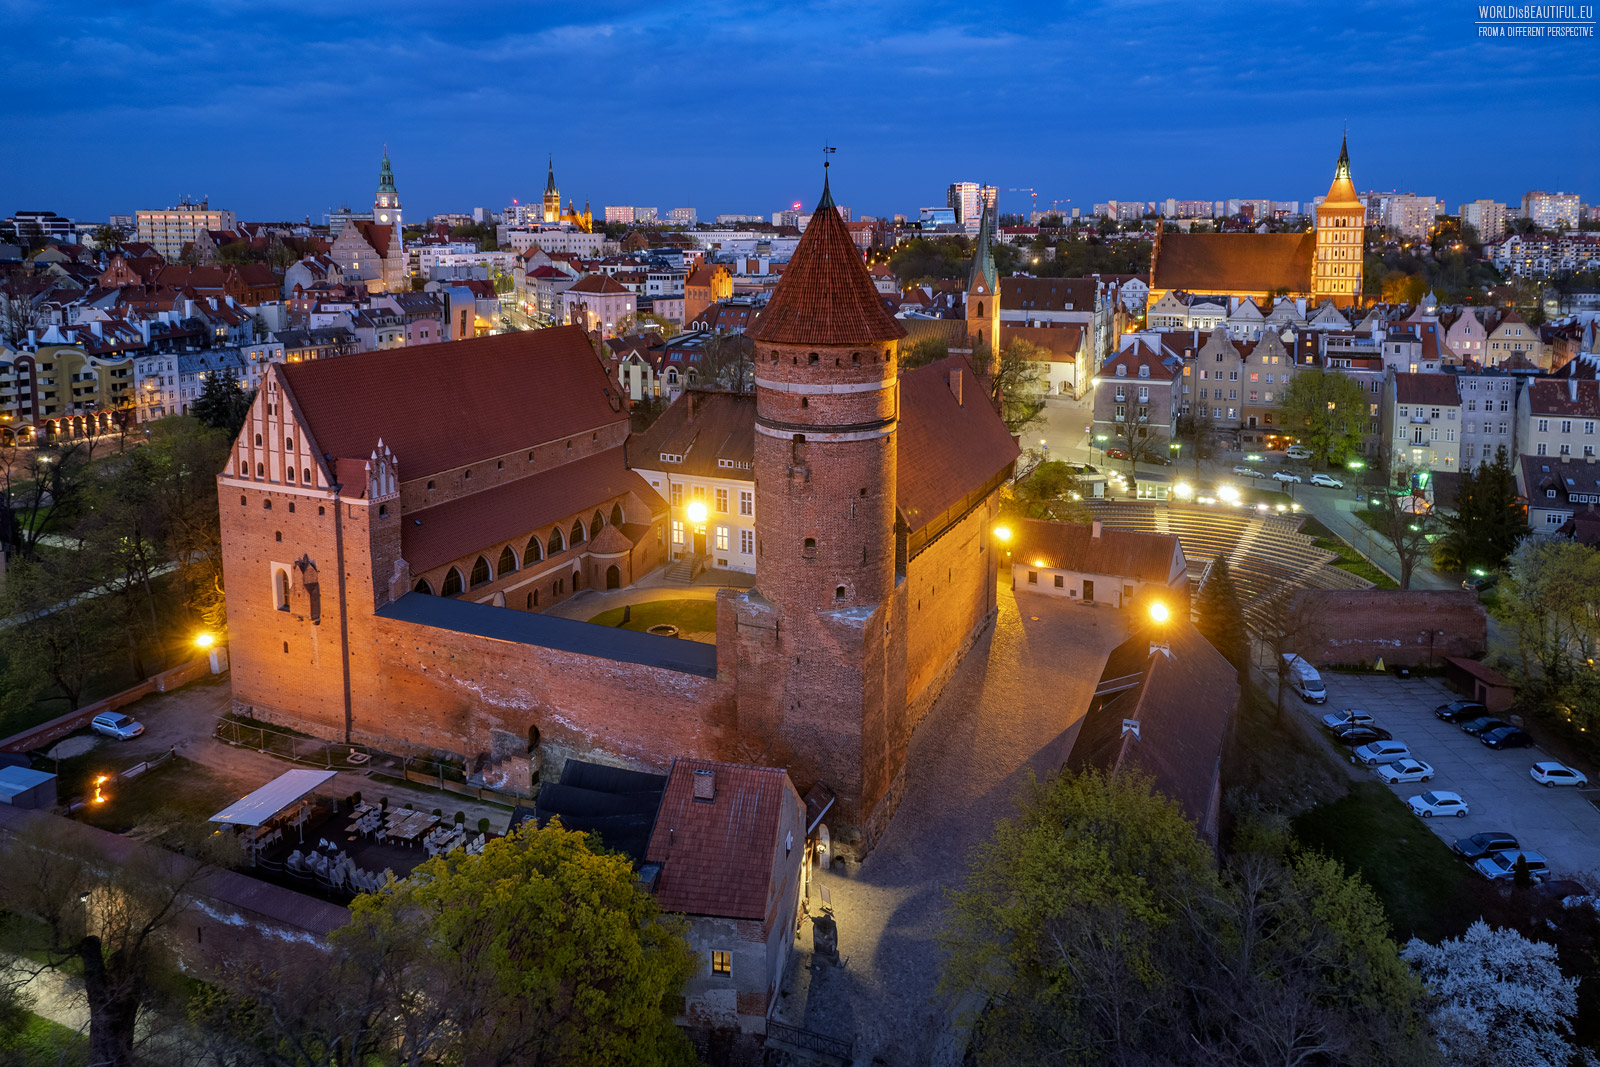 Olsztyn castle at night